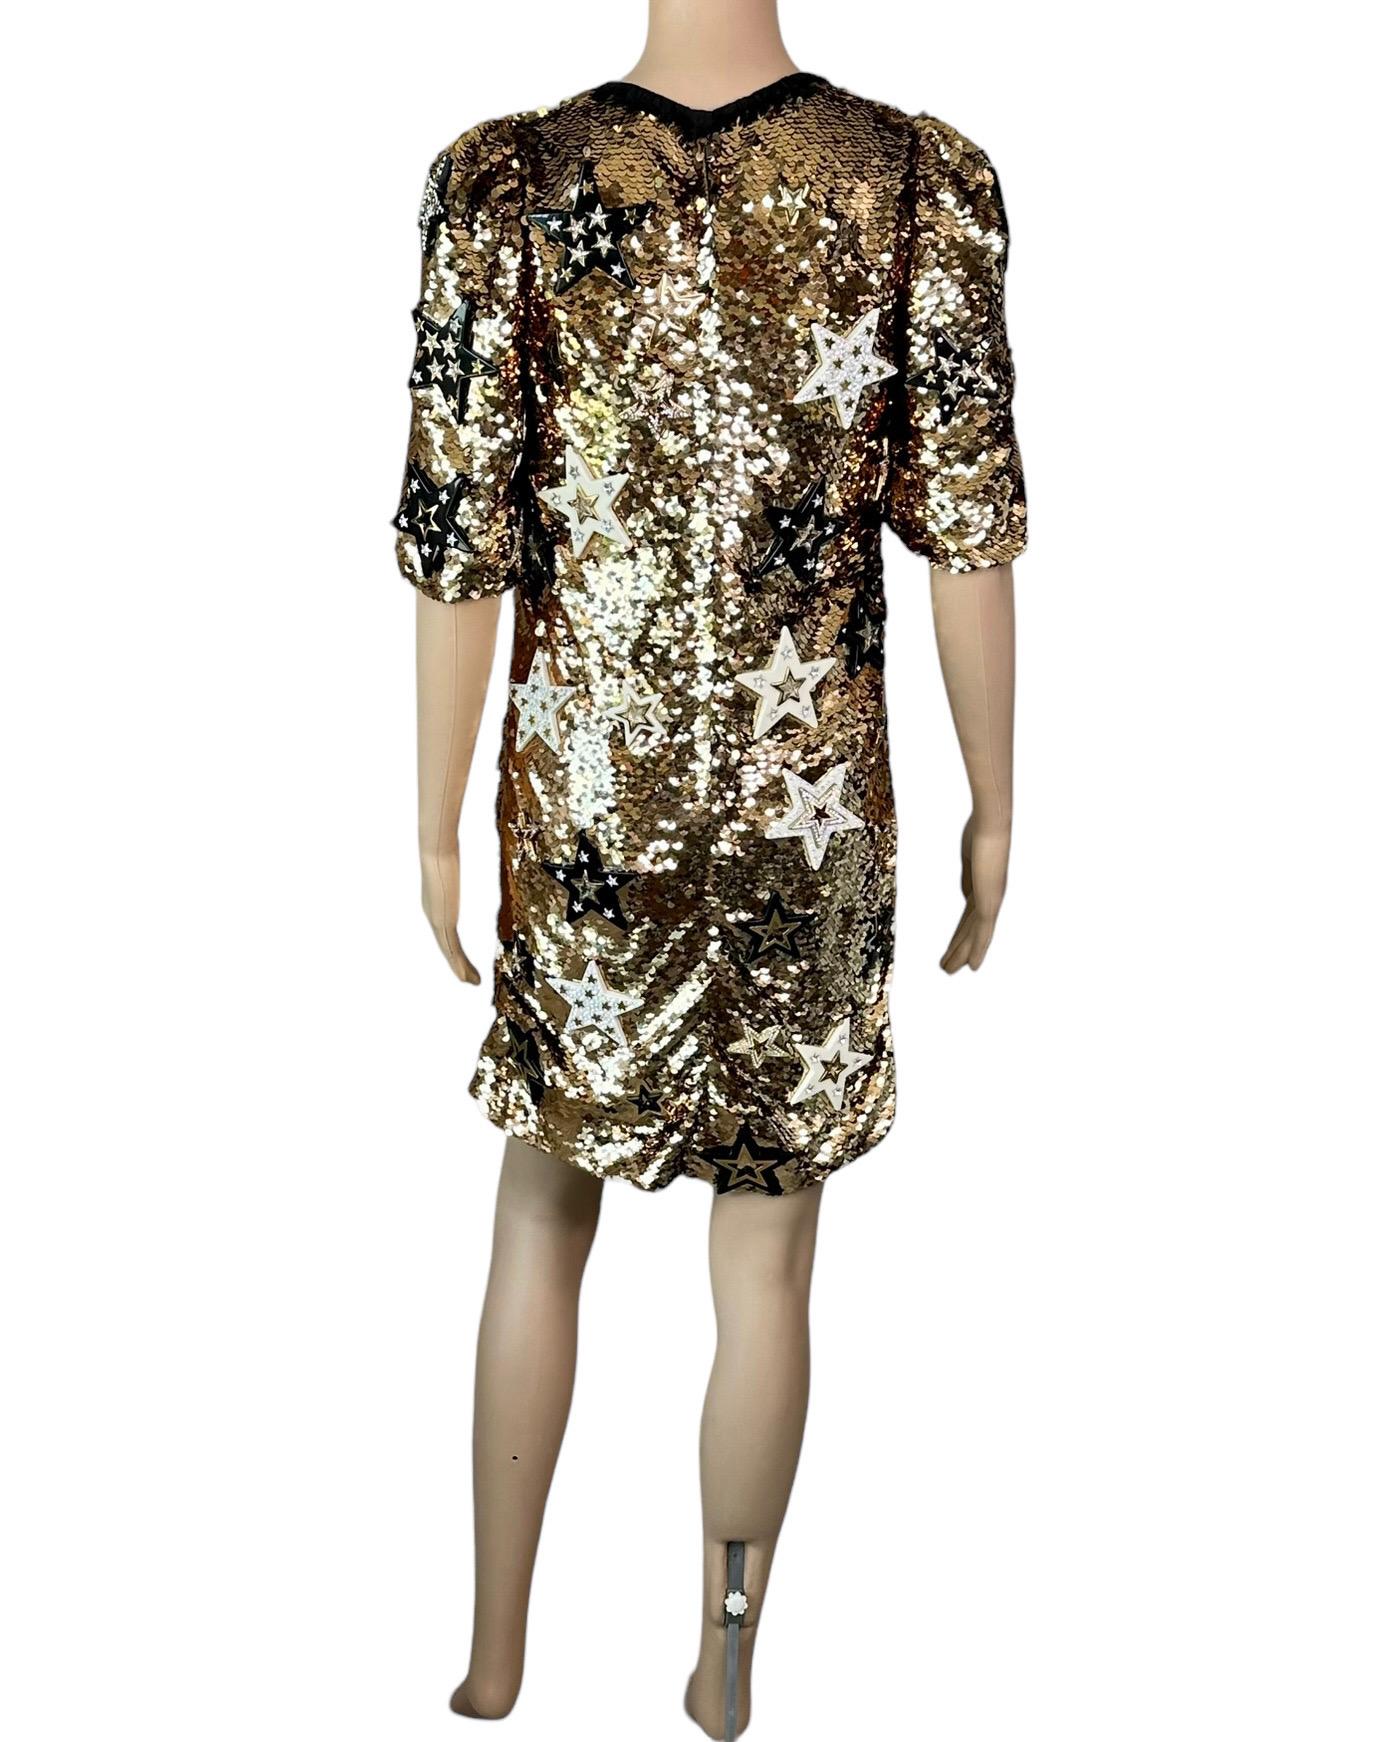 Dolce & Gabbana F/W 2011 Runway Unworn Embellished Star Sequined Gold Mini Dress For Sale 6